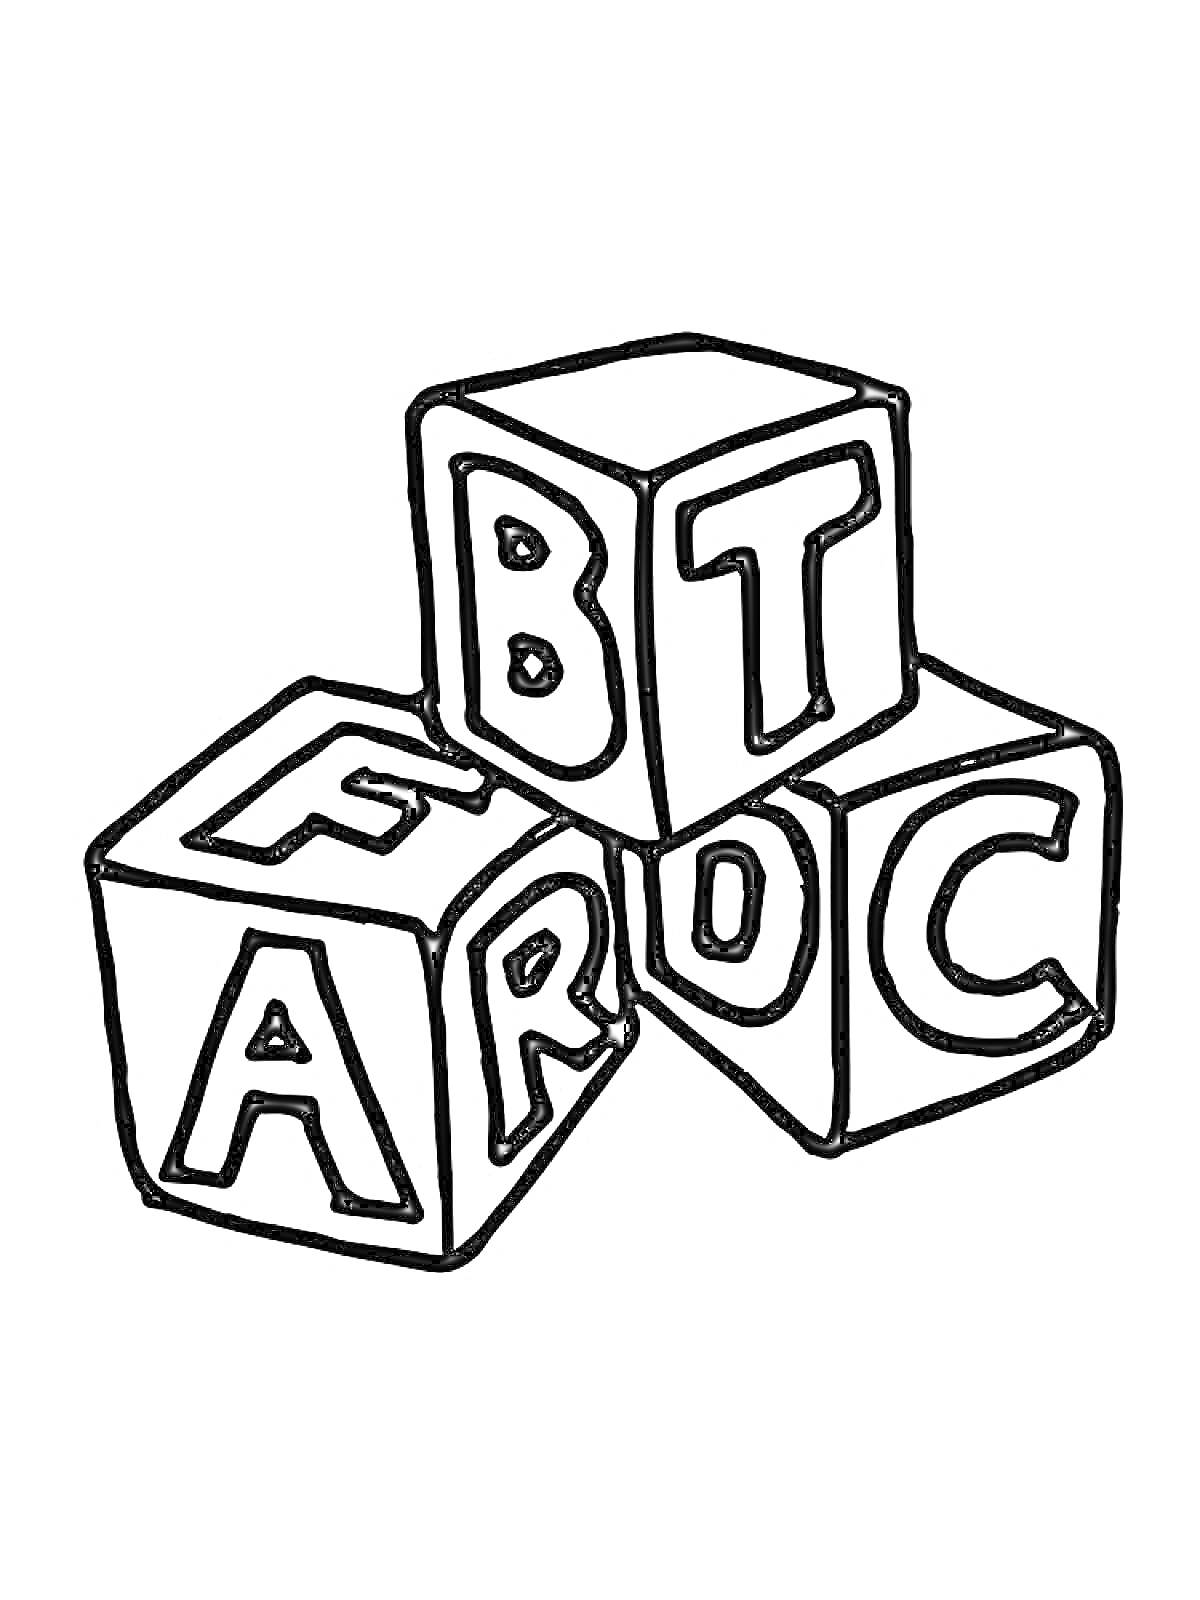 Раскраска Три кубика с буквами B, T, F, A, R, C, D на их гранях